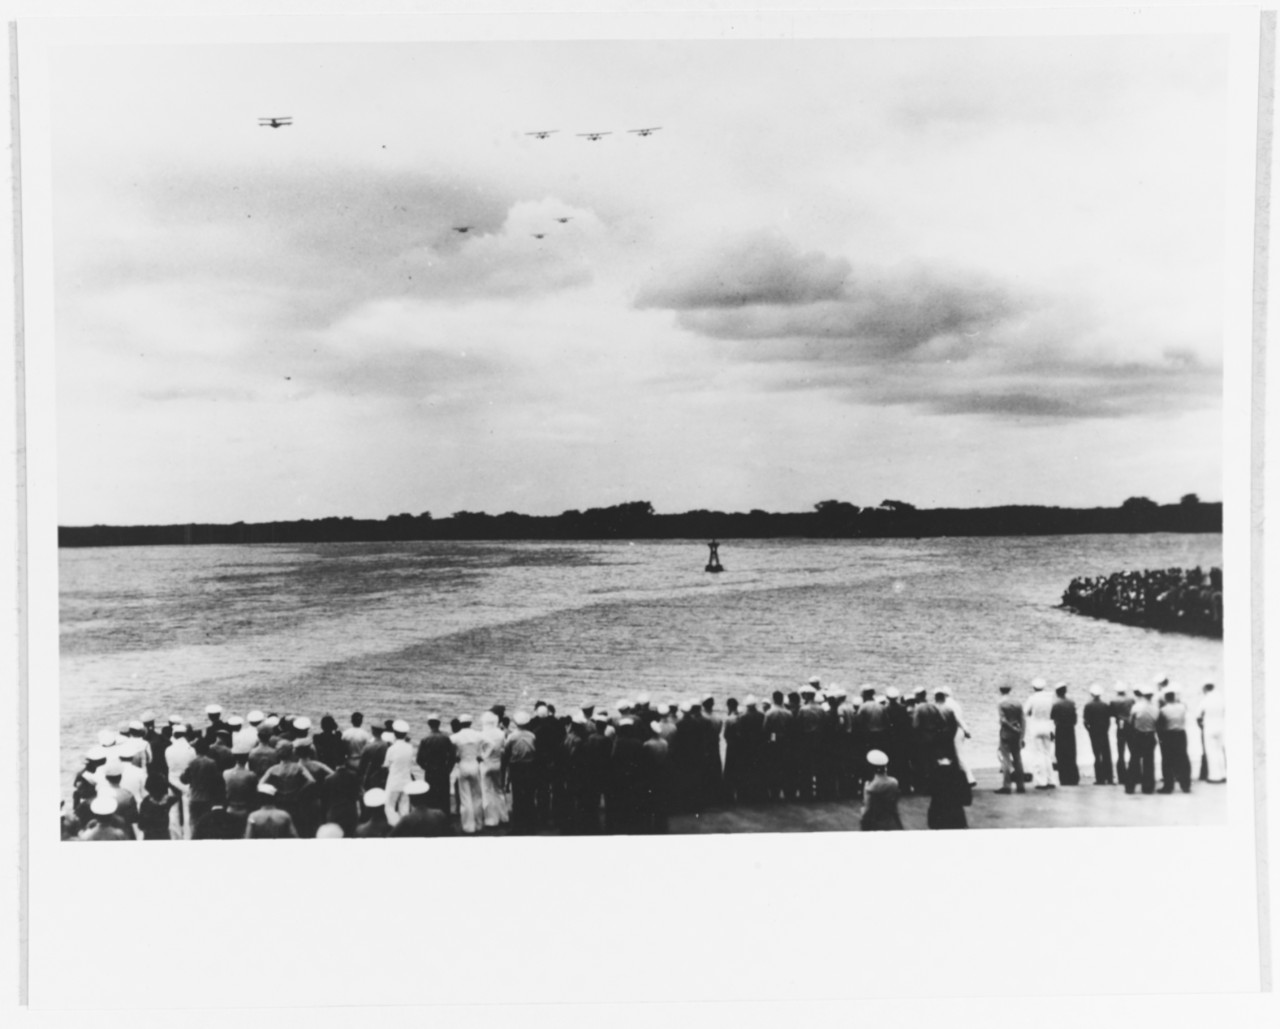 VP-10 Non-Stop Formation Flight, 10-11 January 1934